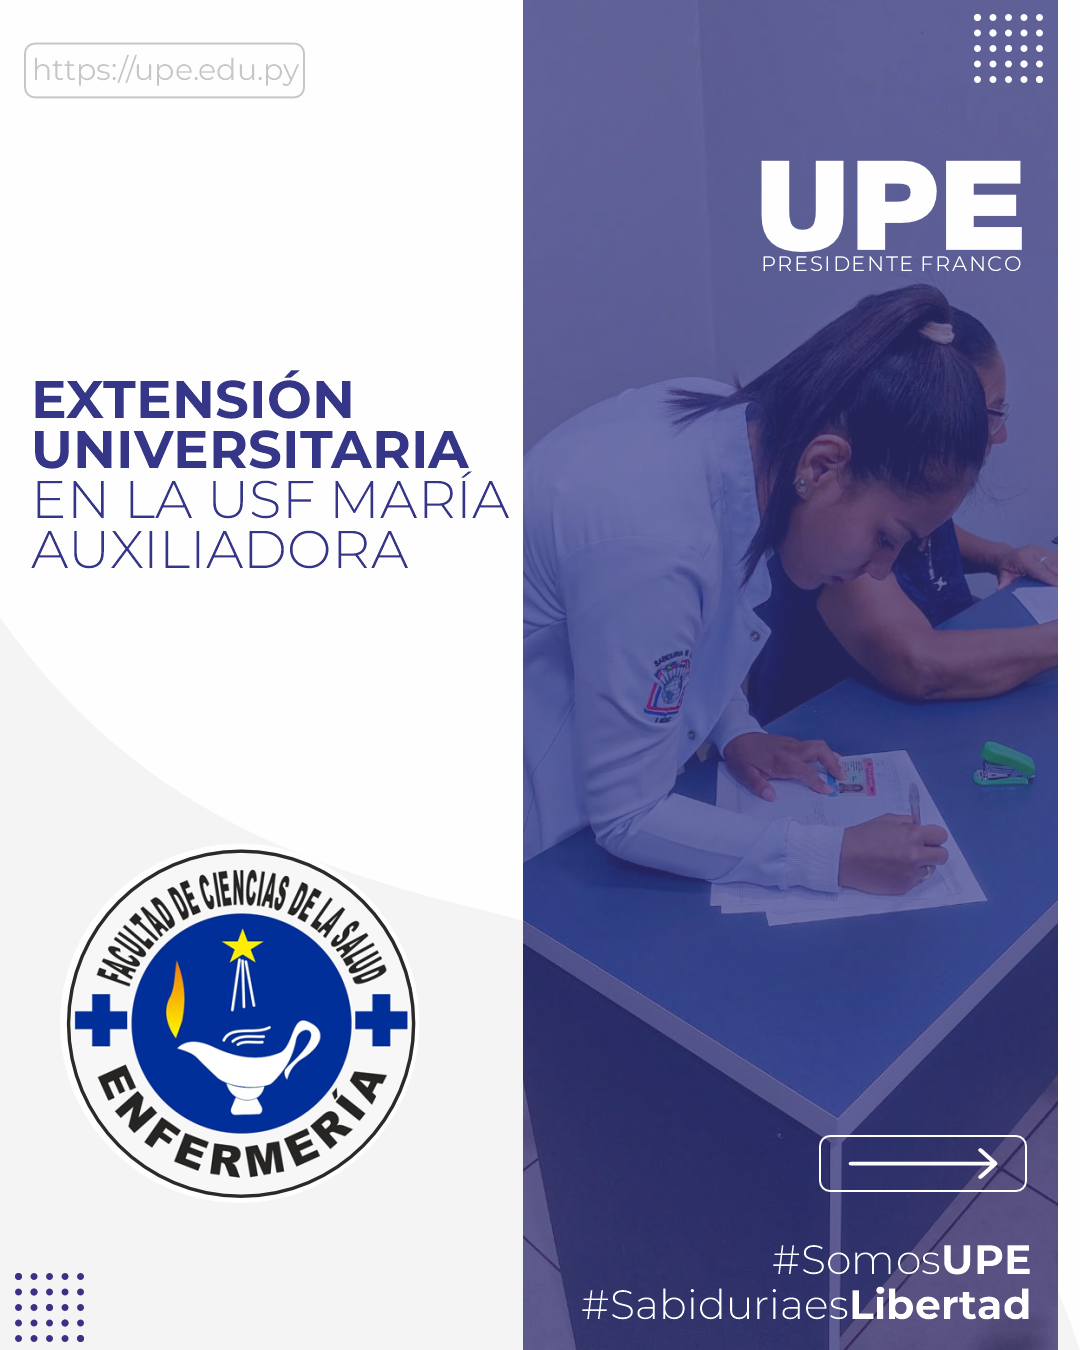 Avance Exitoso de Estudiantes de Enfermería (UPE) con Extensión Universitaria